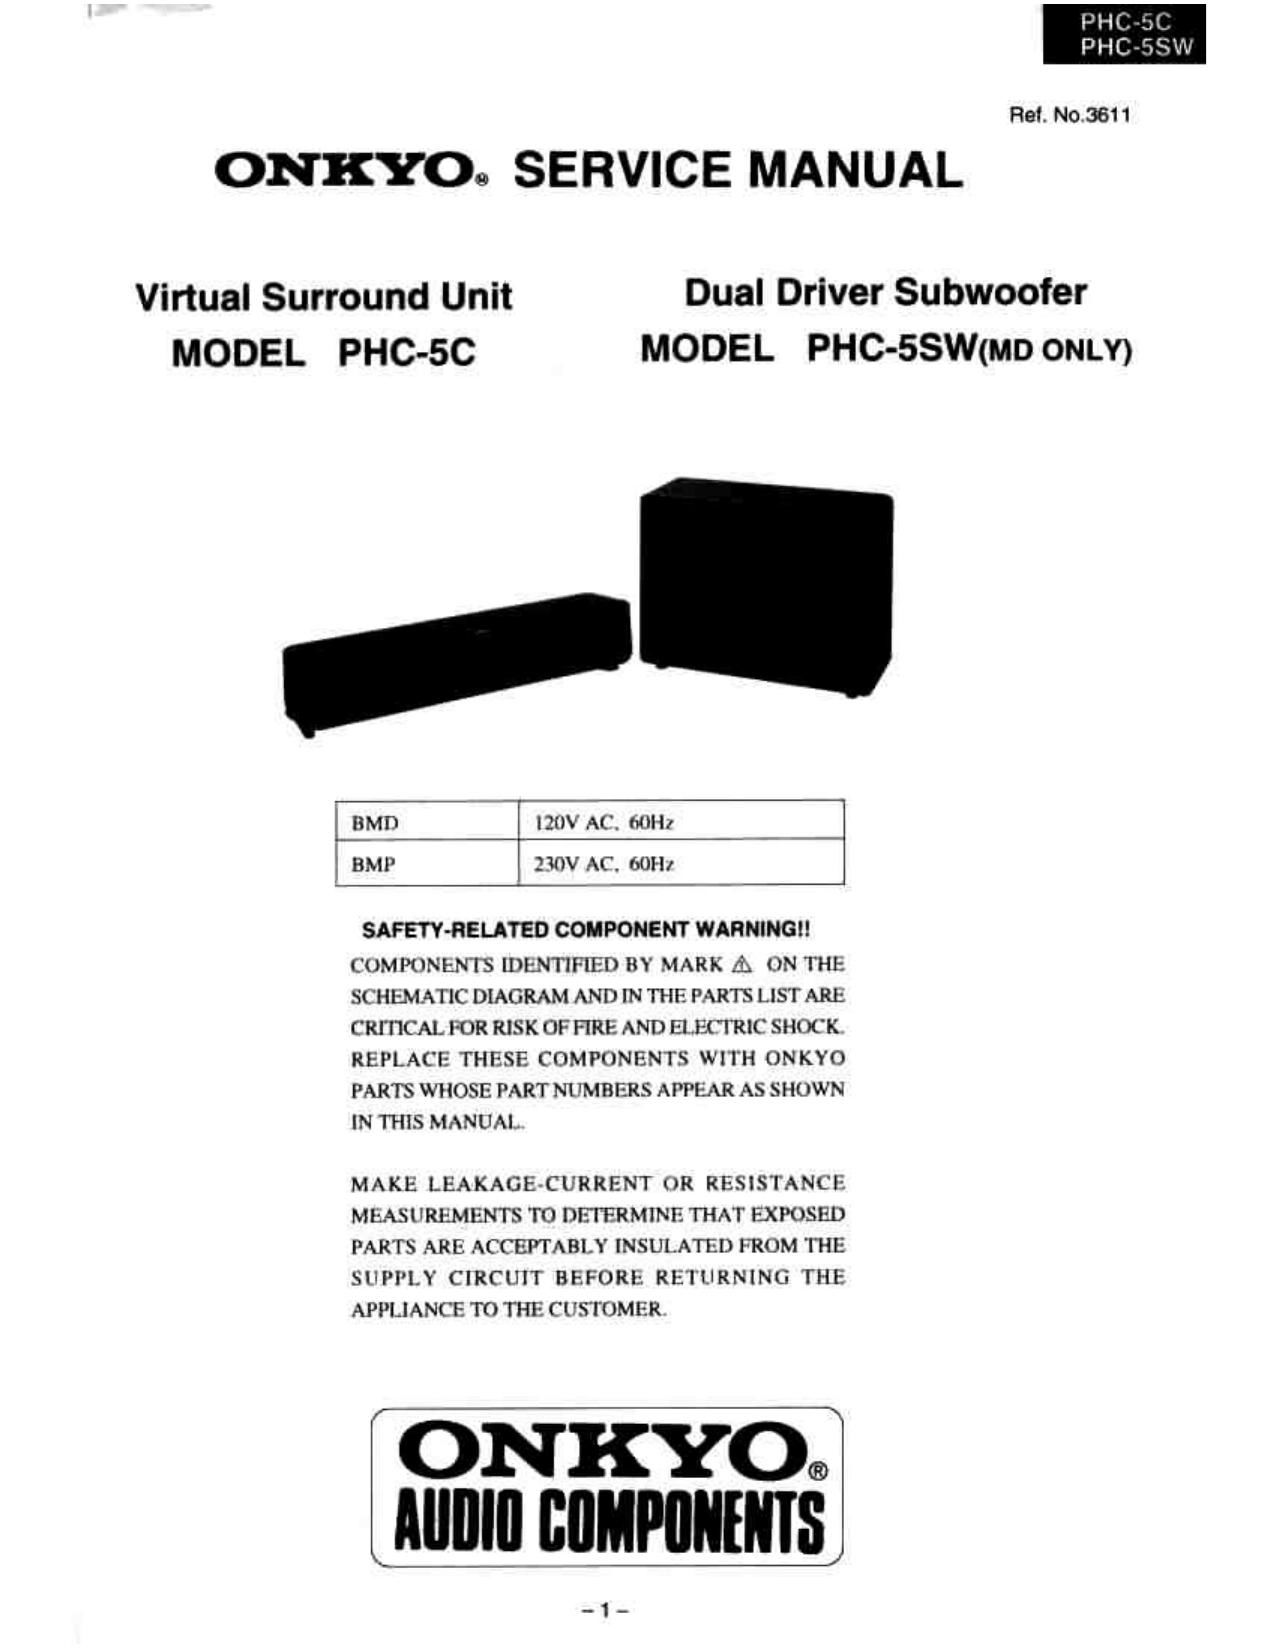 Onkyo PHC 5 SW Service Manual